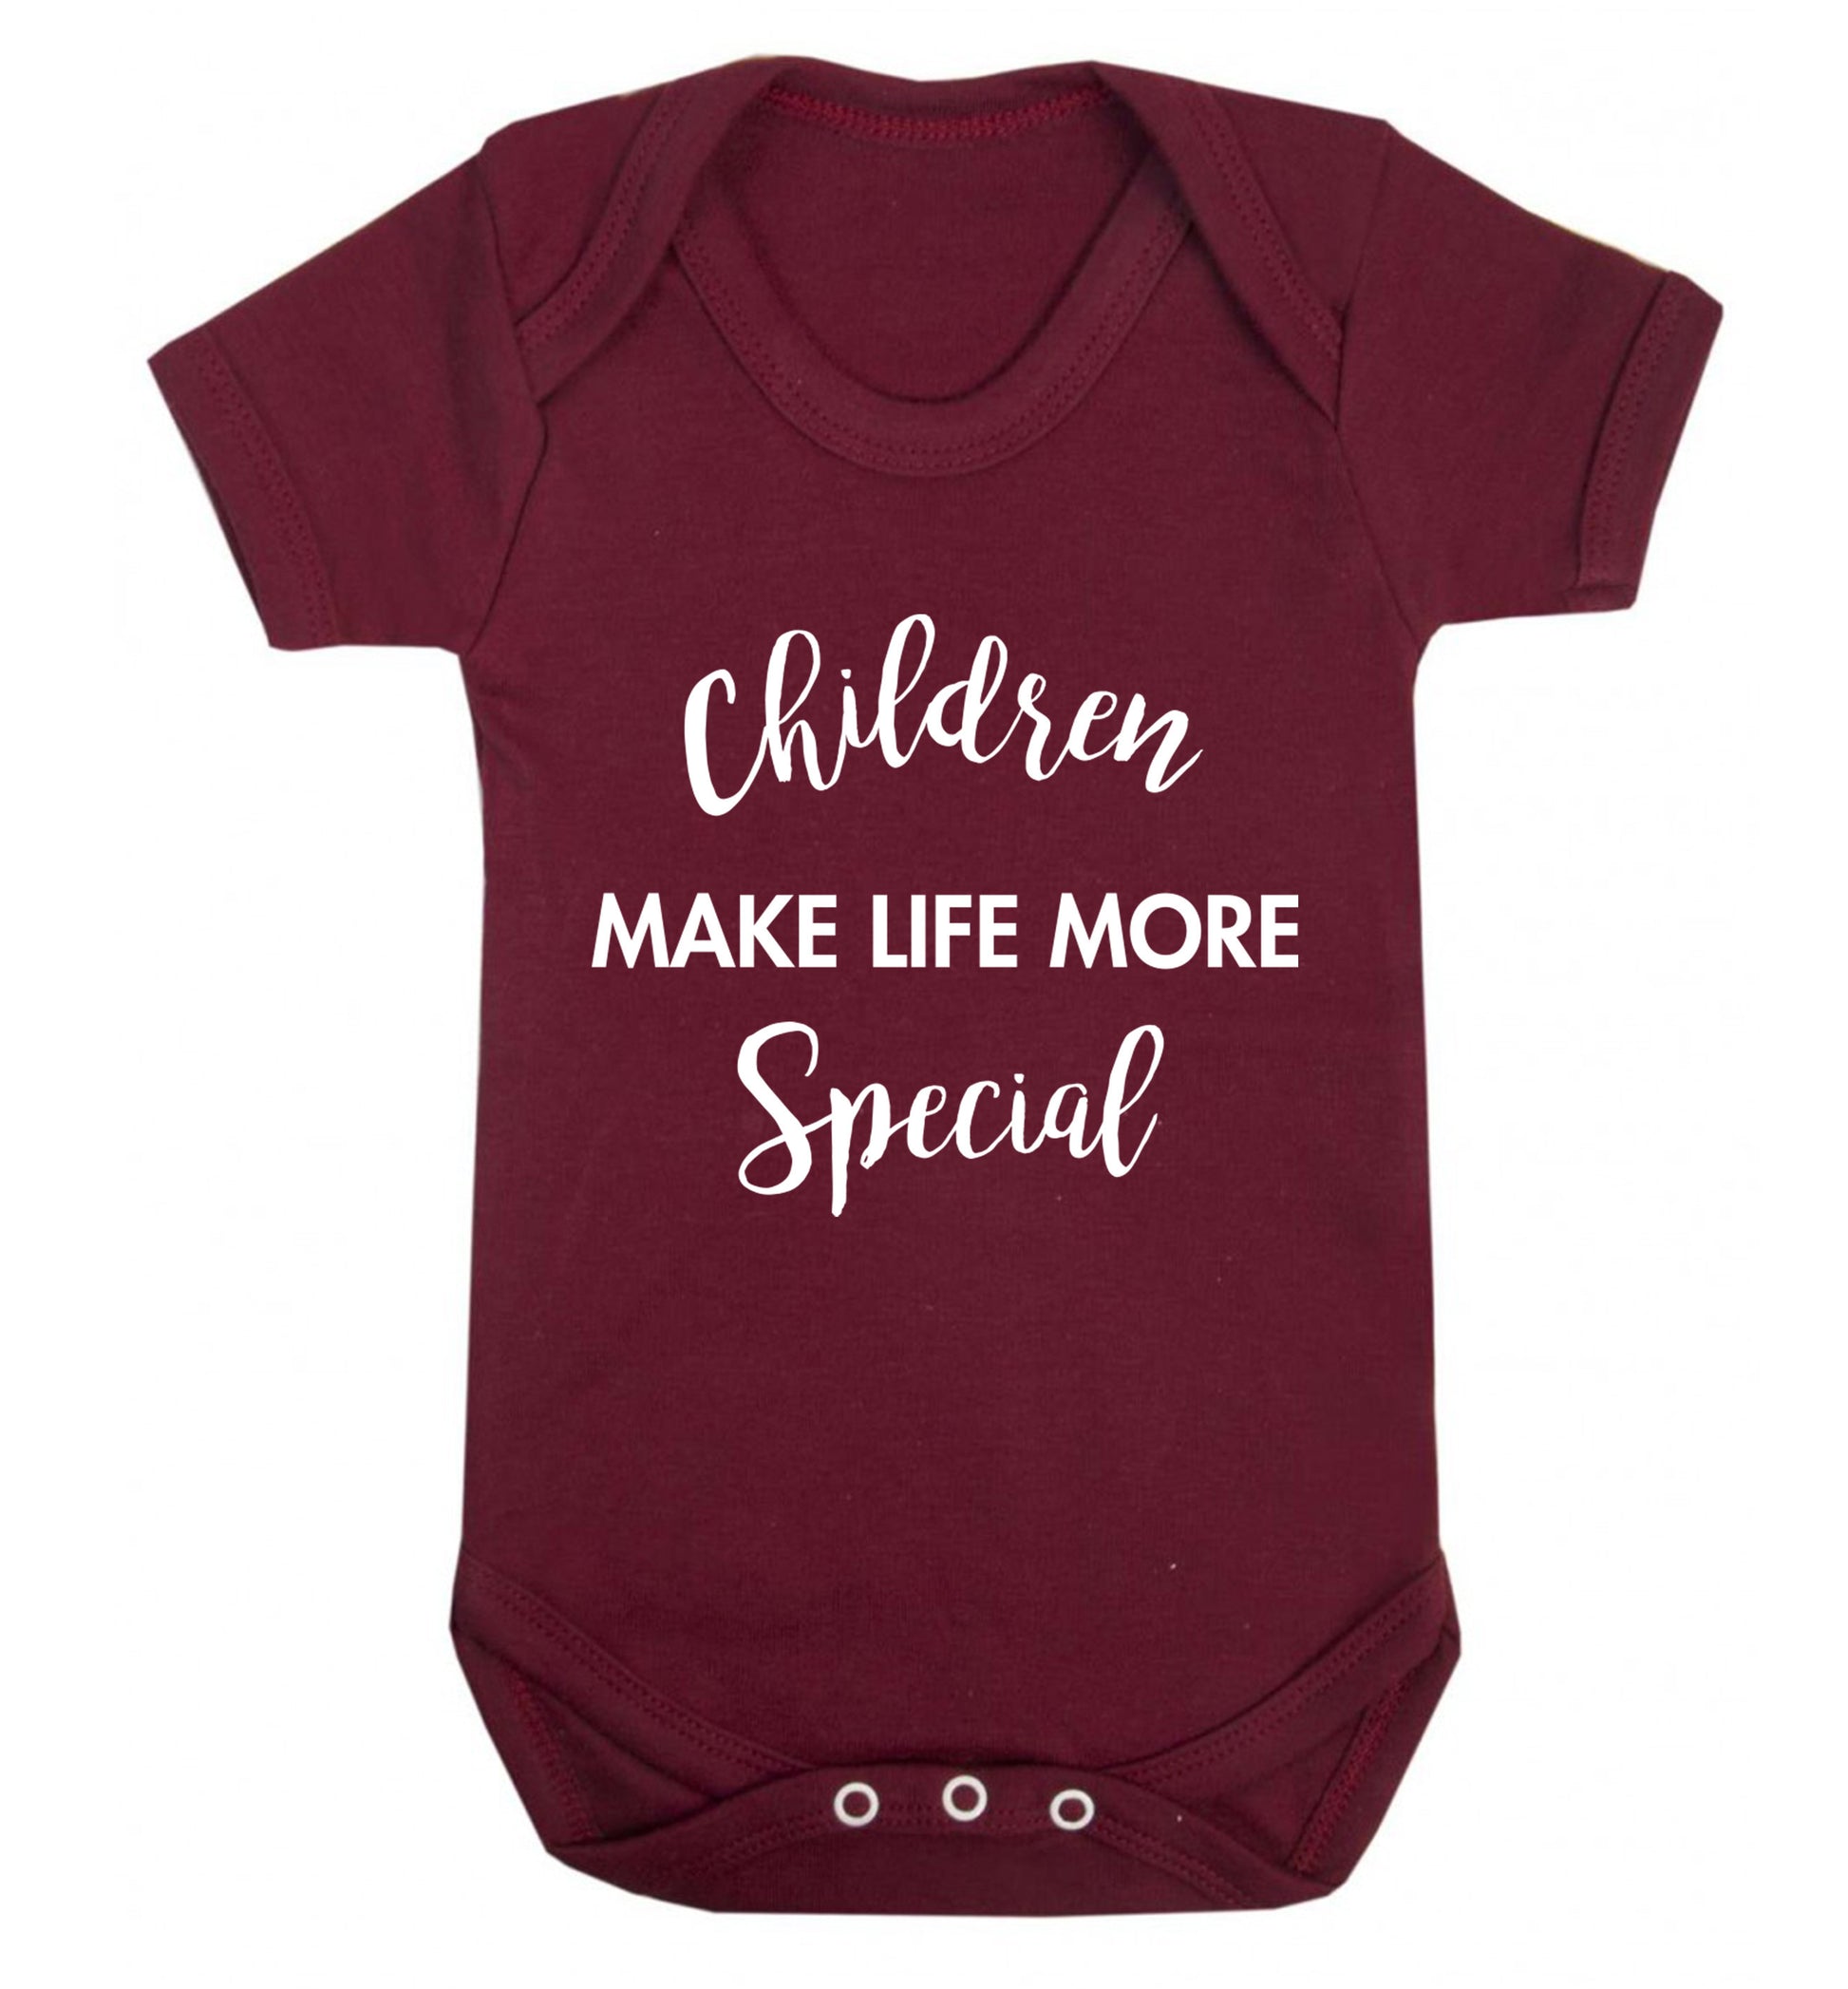 Children make life more special Baby Vest maroon 18-24 months